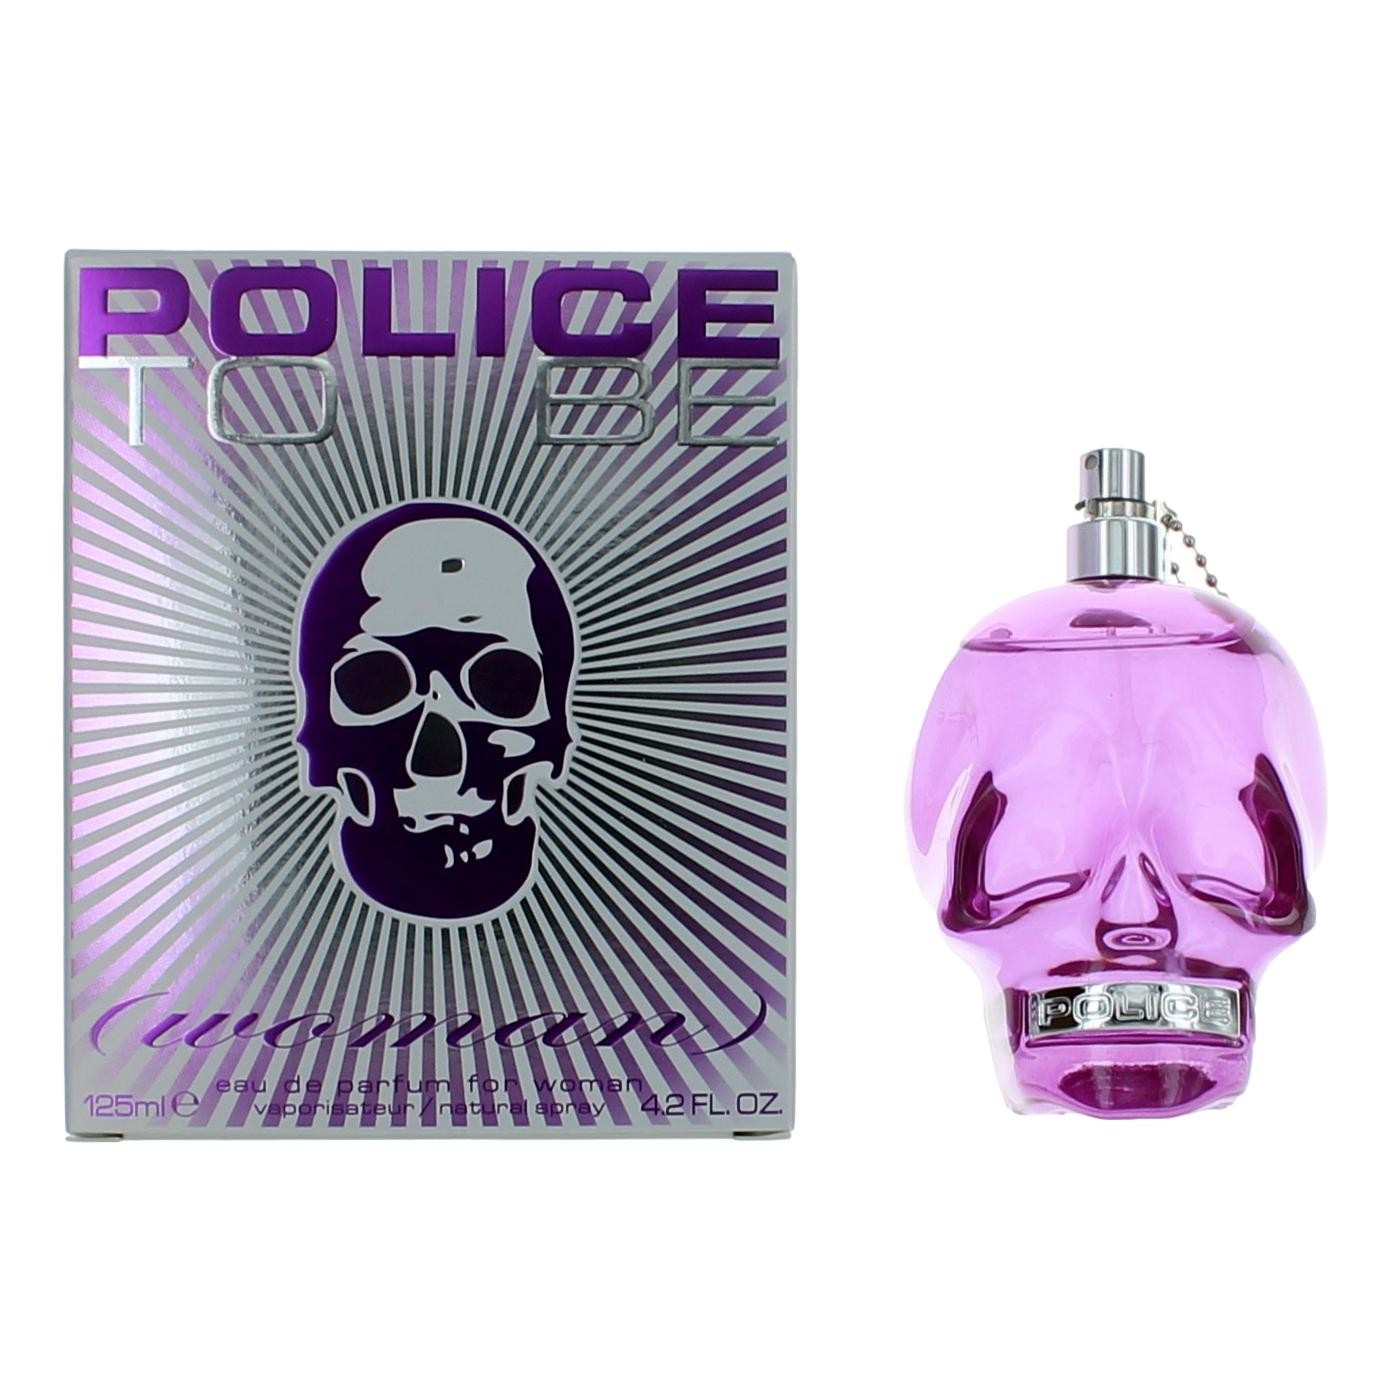 Police To Be by Police 4.2 oz Eau de Parfum Spray for Women